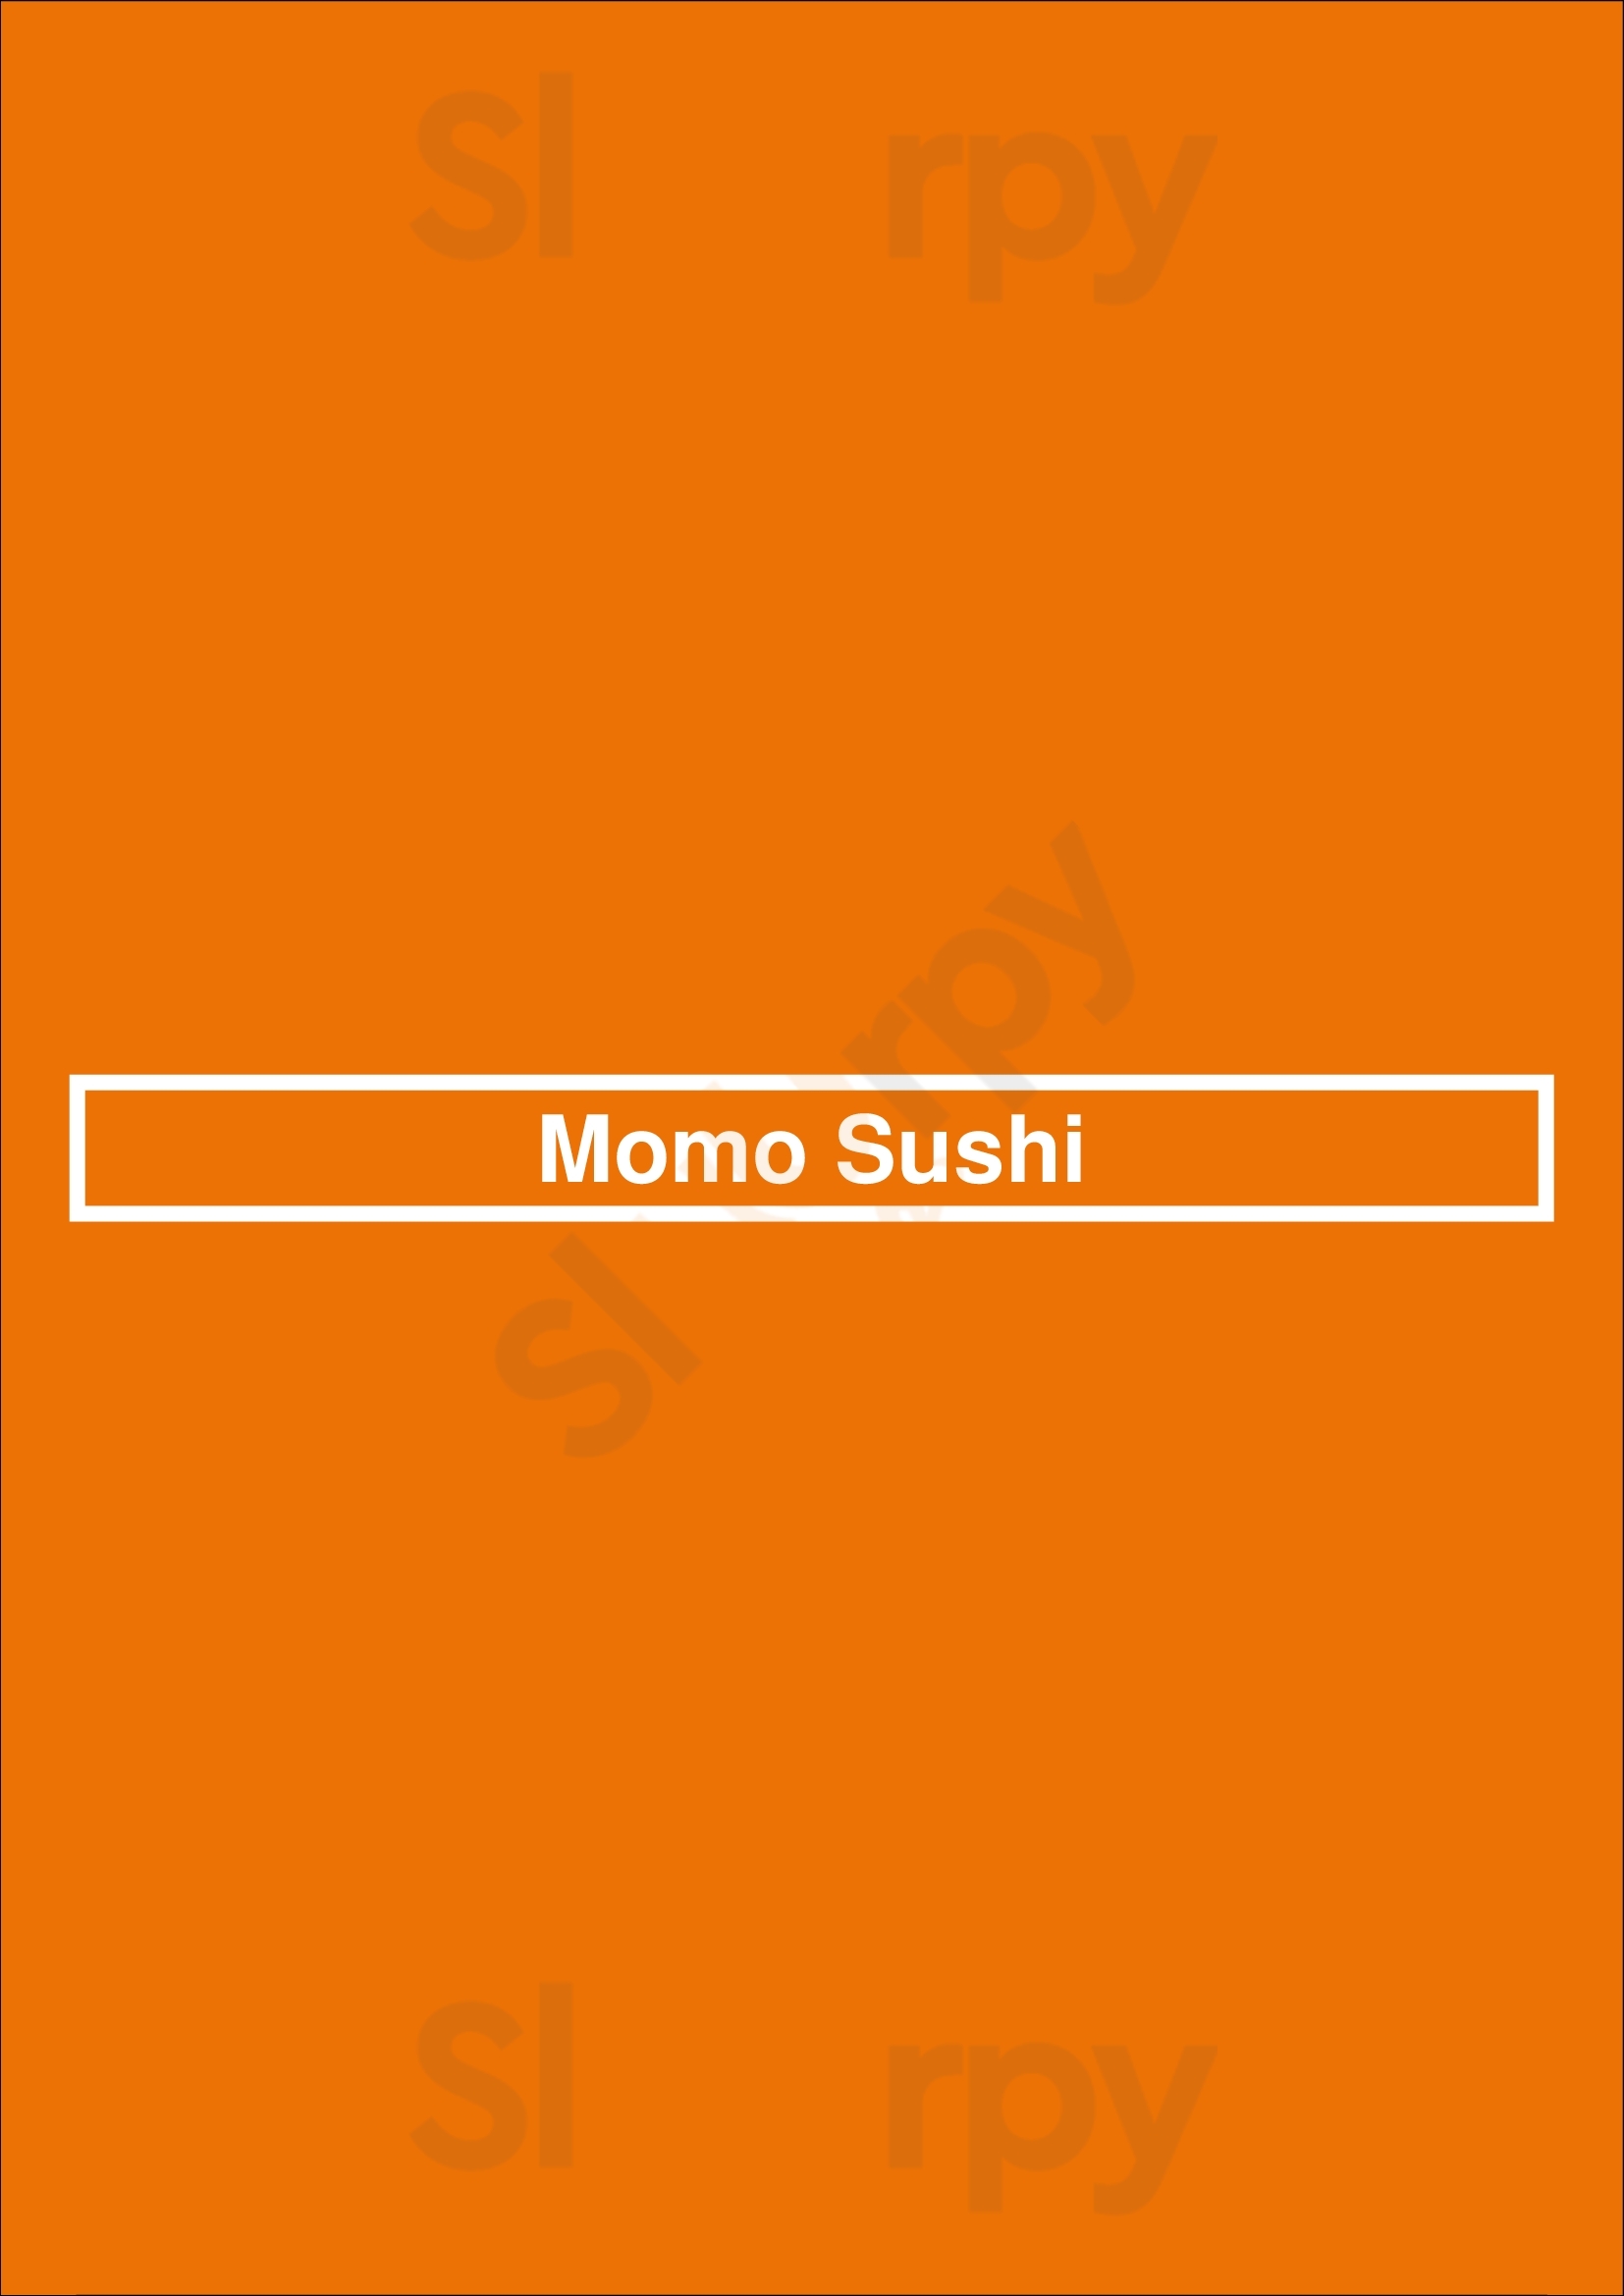 Momo Sushi Vancouver Menu - 1